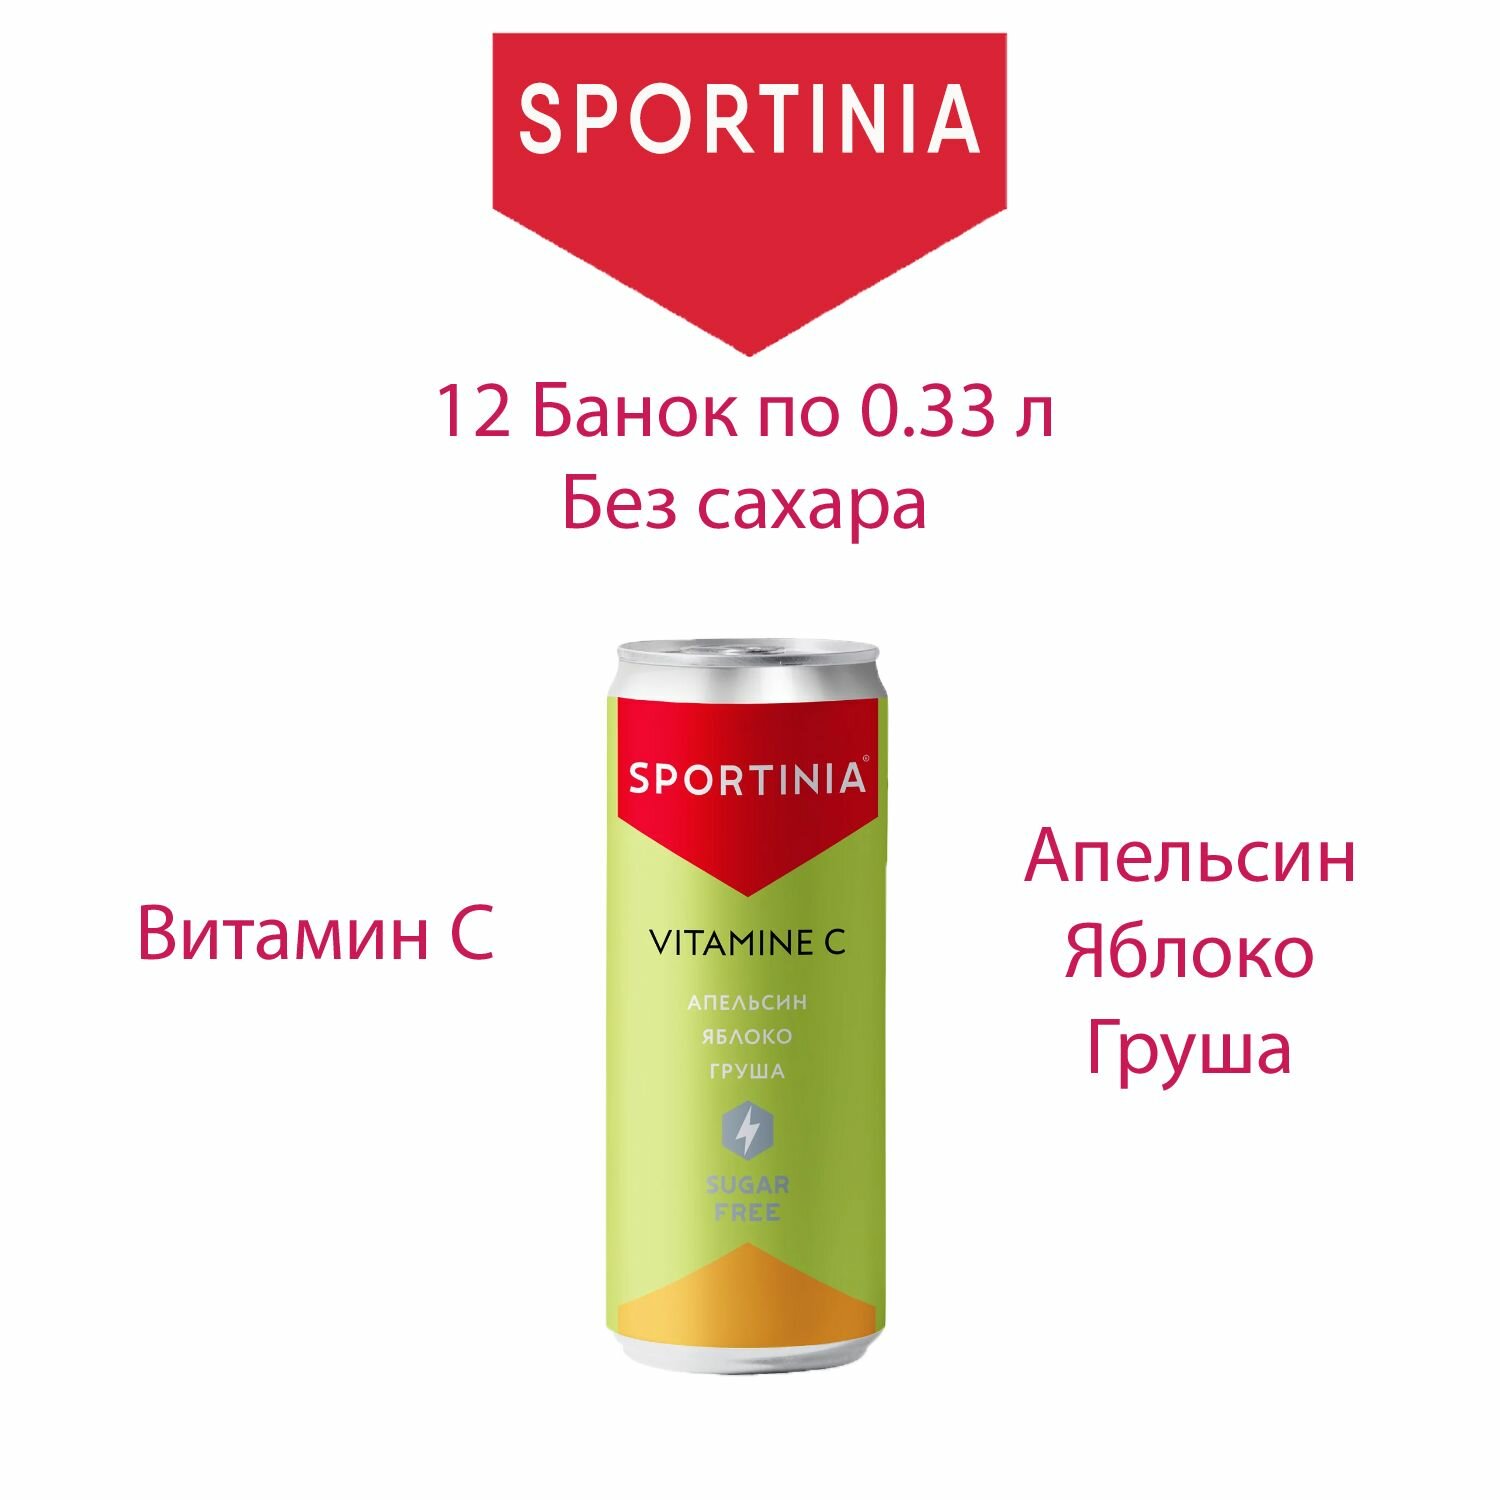 Vitamine C Sportinia без сахара 12 банок по 0.33л, витаминизированный напиток